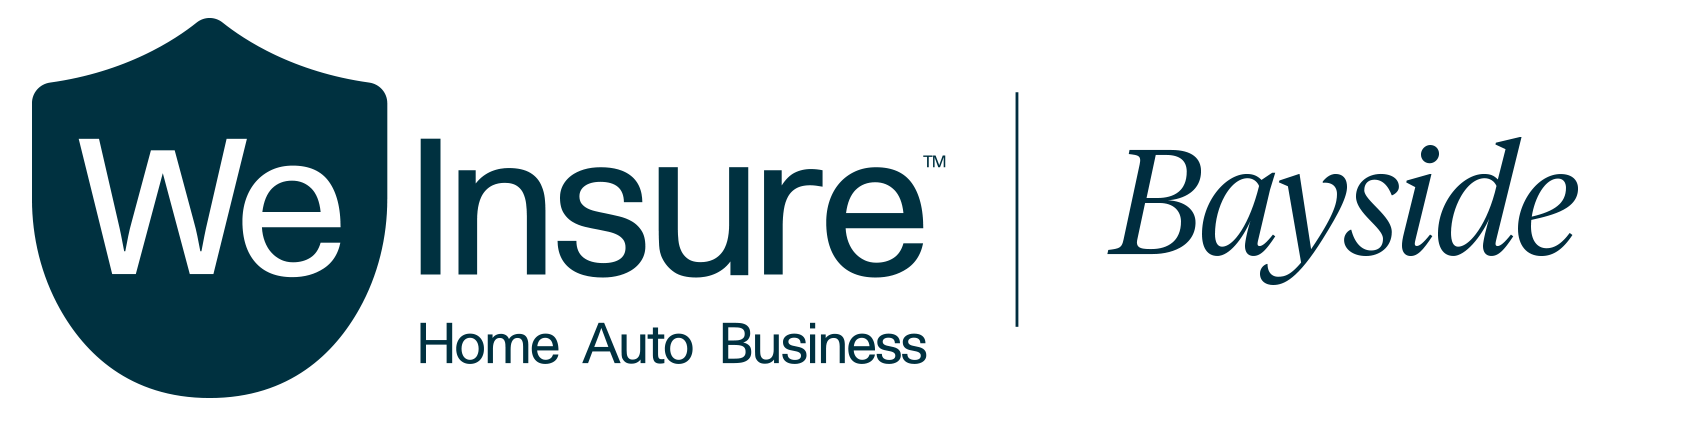 bayside we insure wordmark logo in dark blue